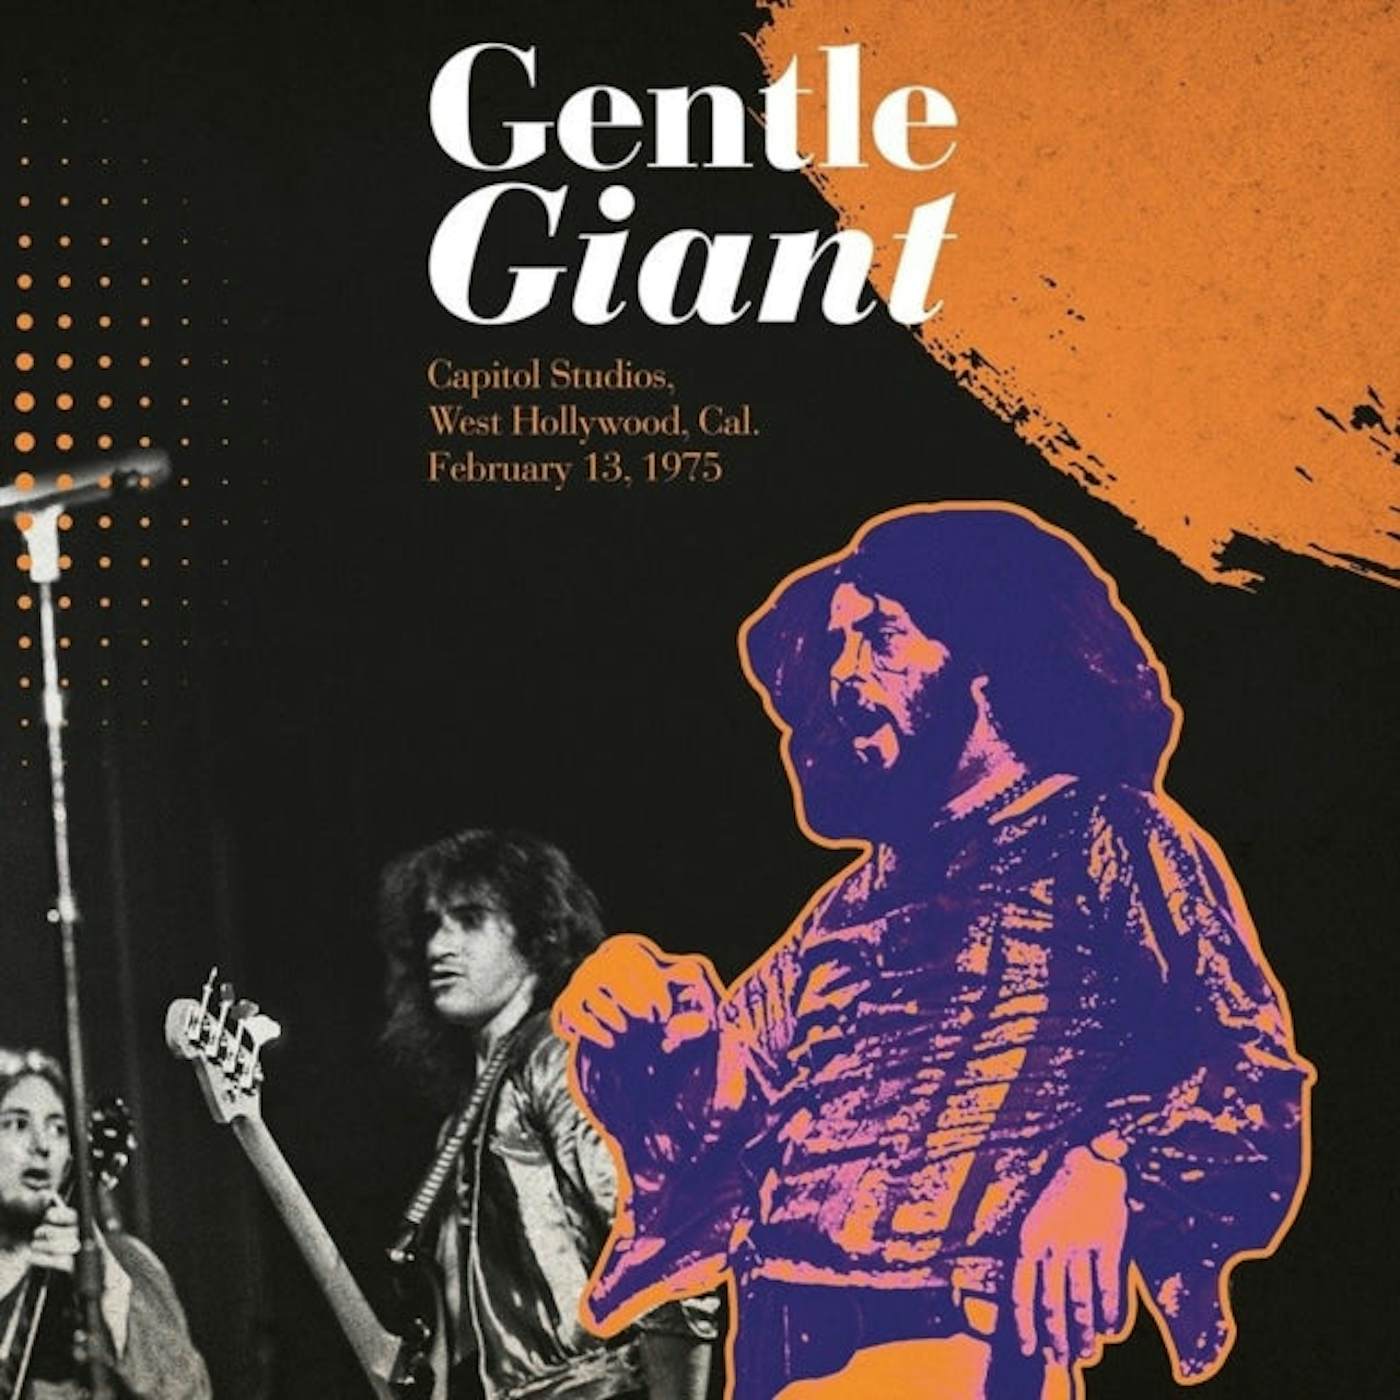 Gentle Giant LP Vinyl Record - Capitol Studios. West Hollywood. Cal. Fe